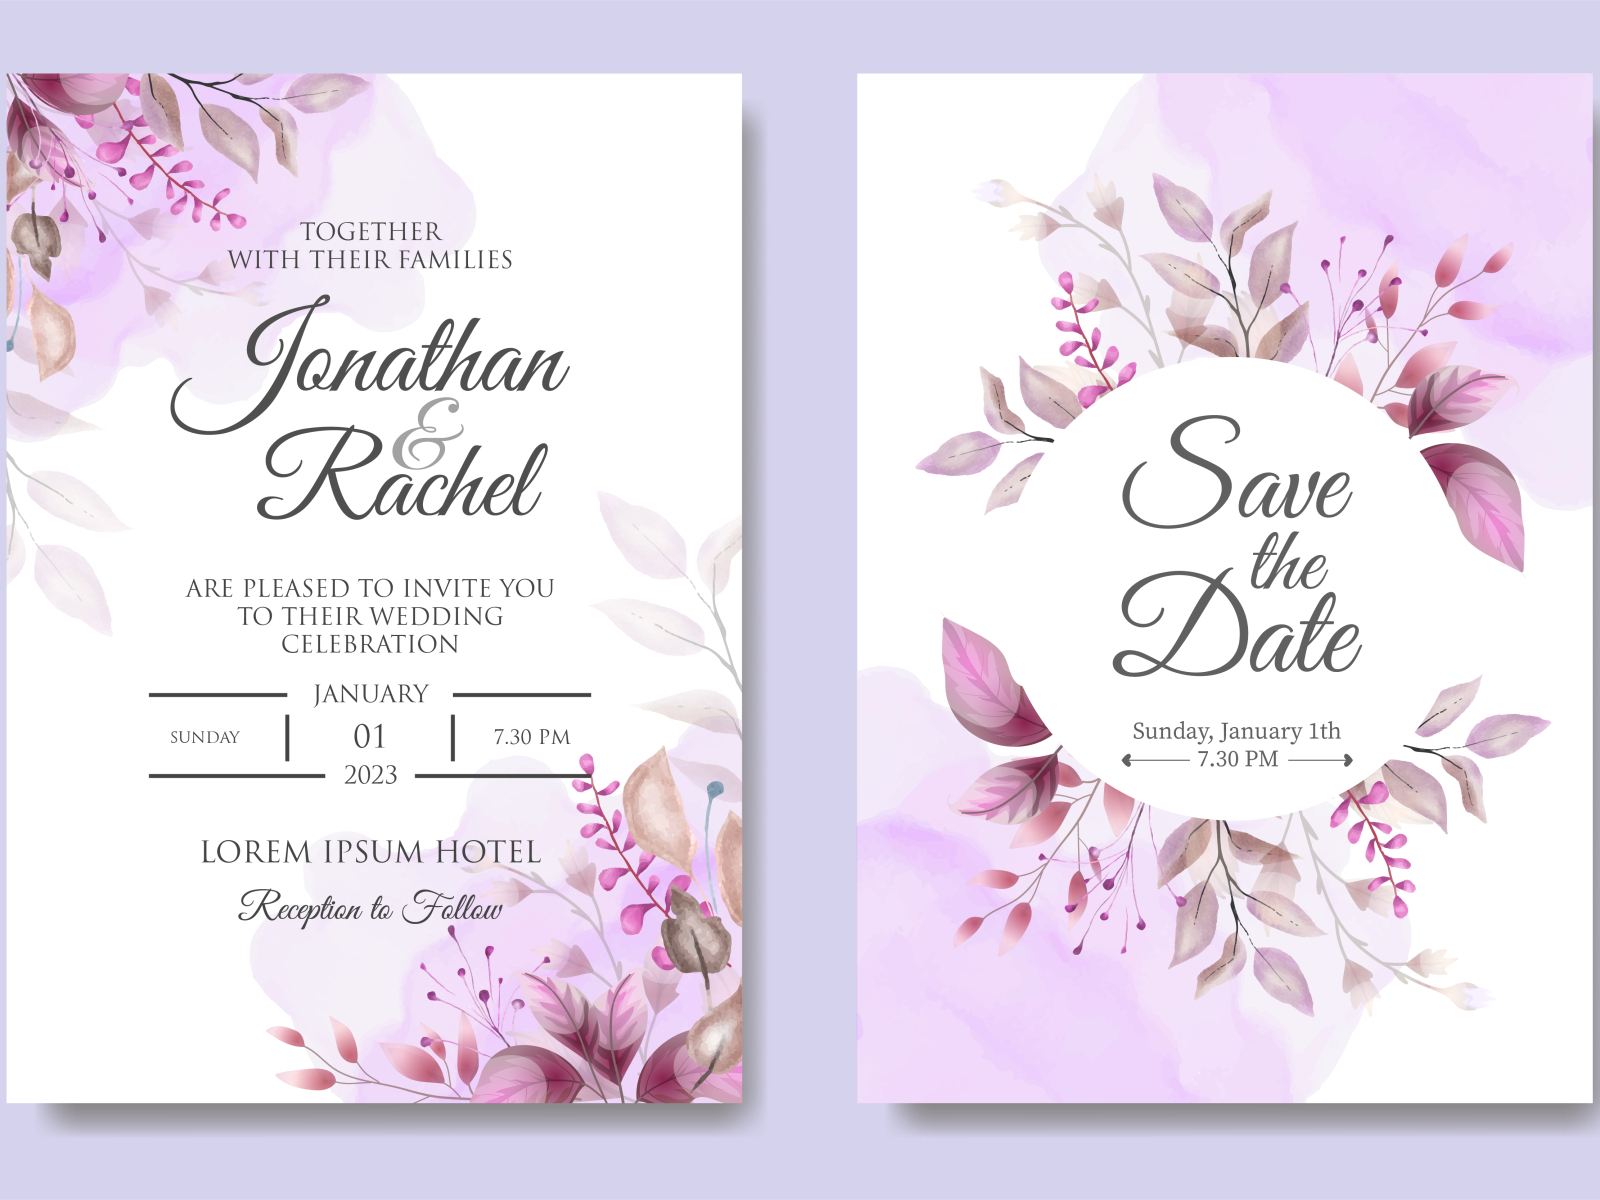 Elegant floral wedding invitation template in classic purple by Yekti